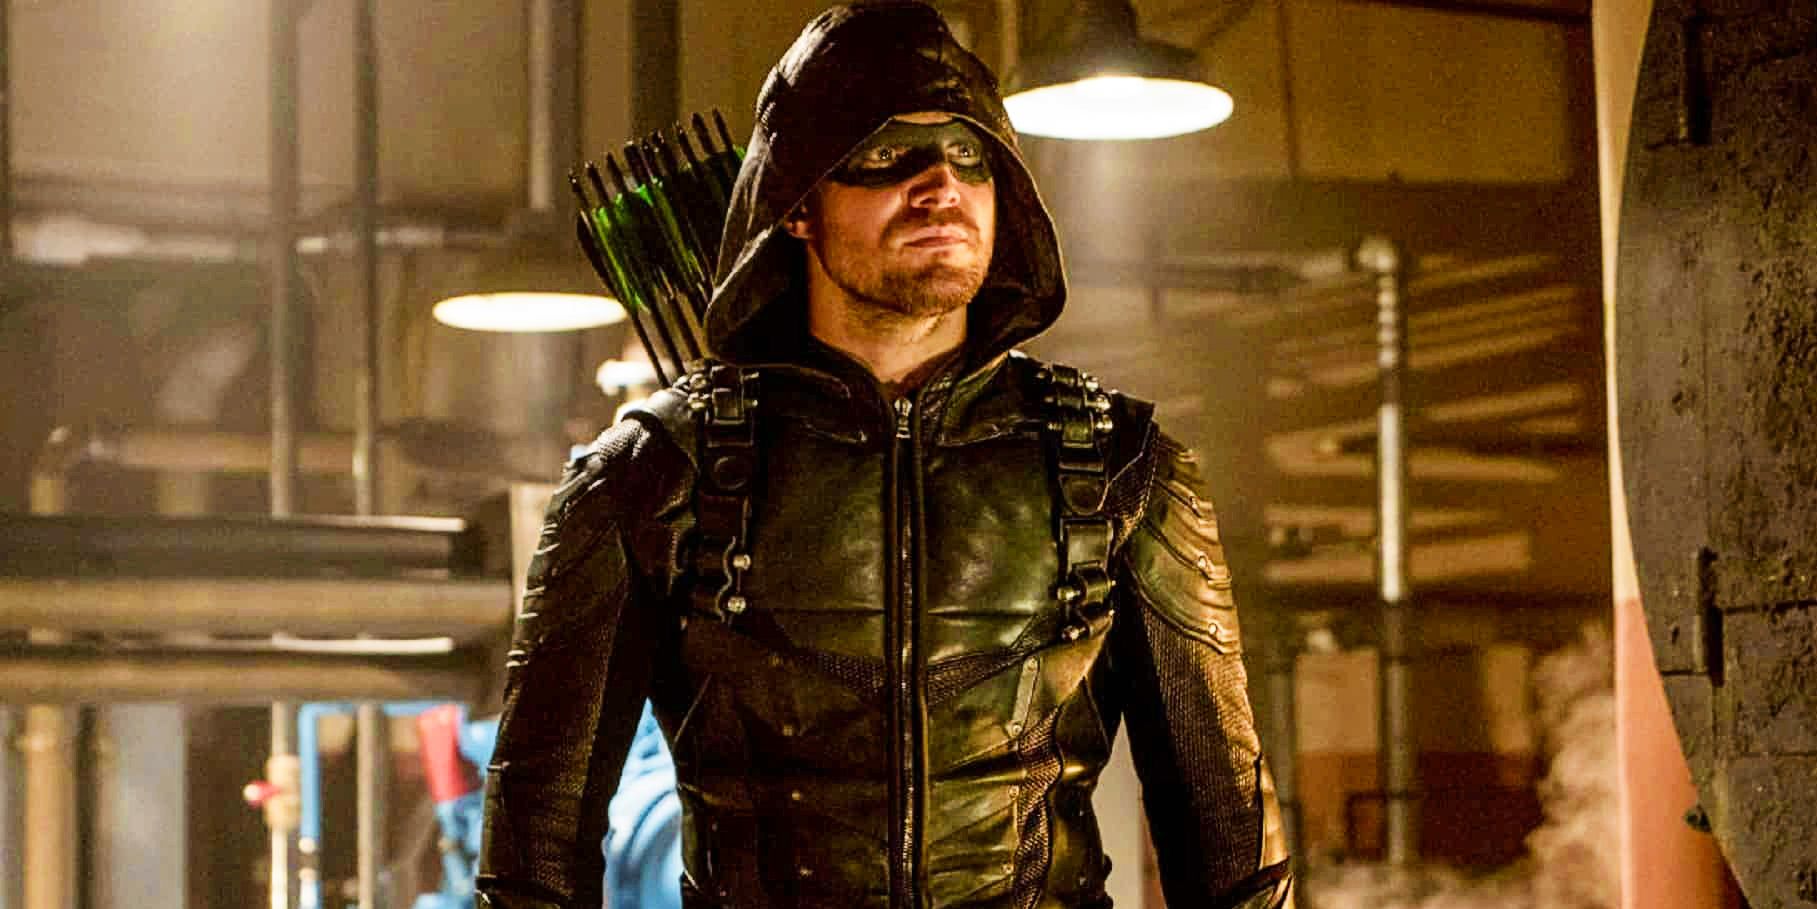 Stephen Amell as Green Arrow